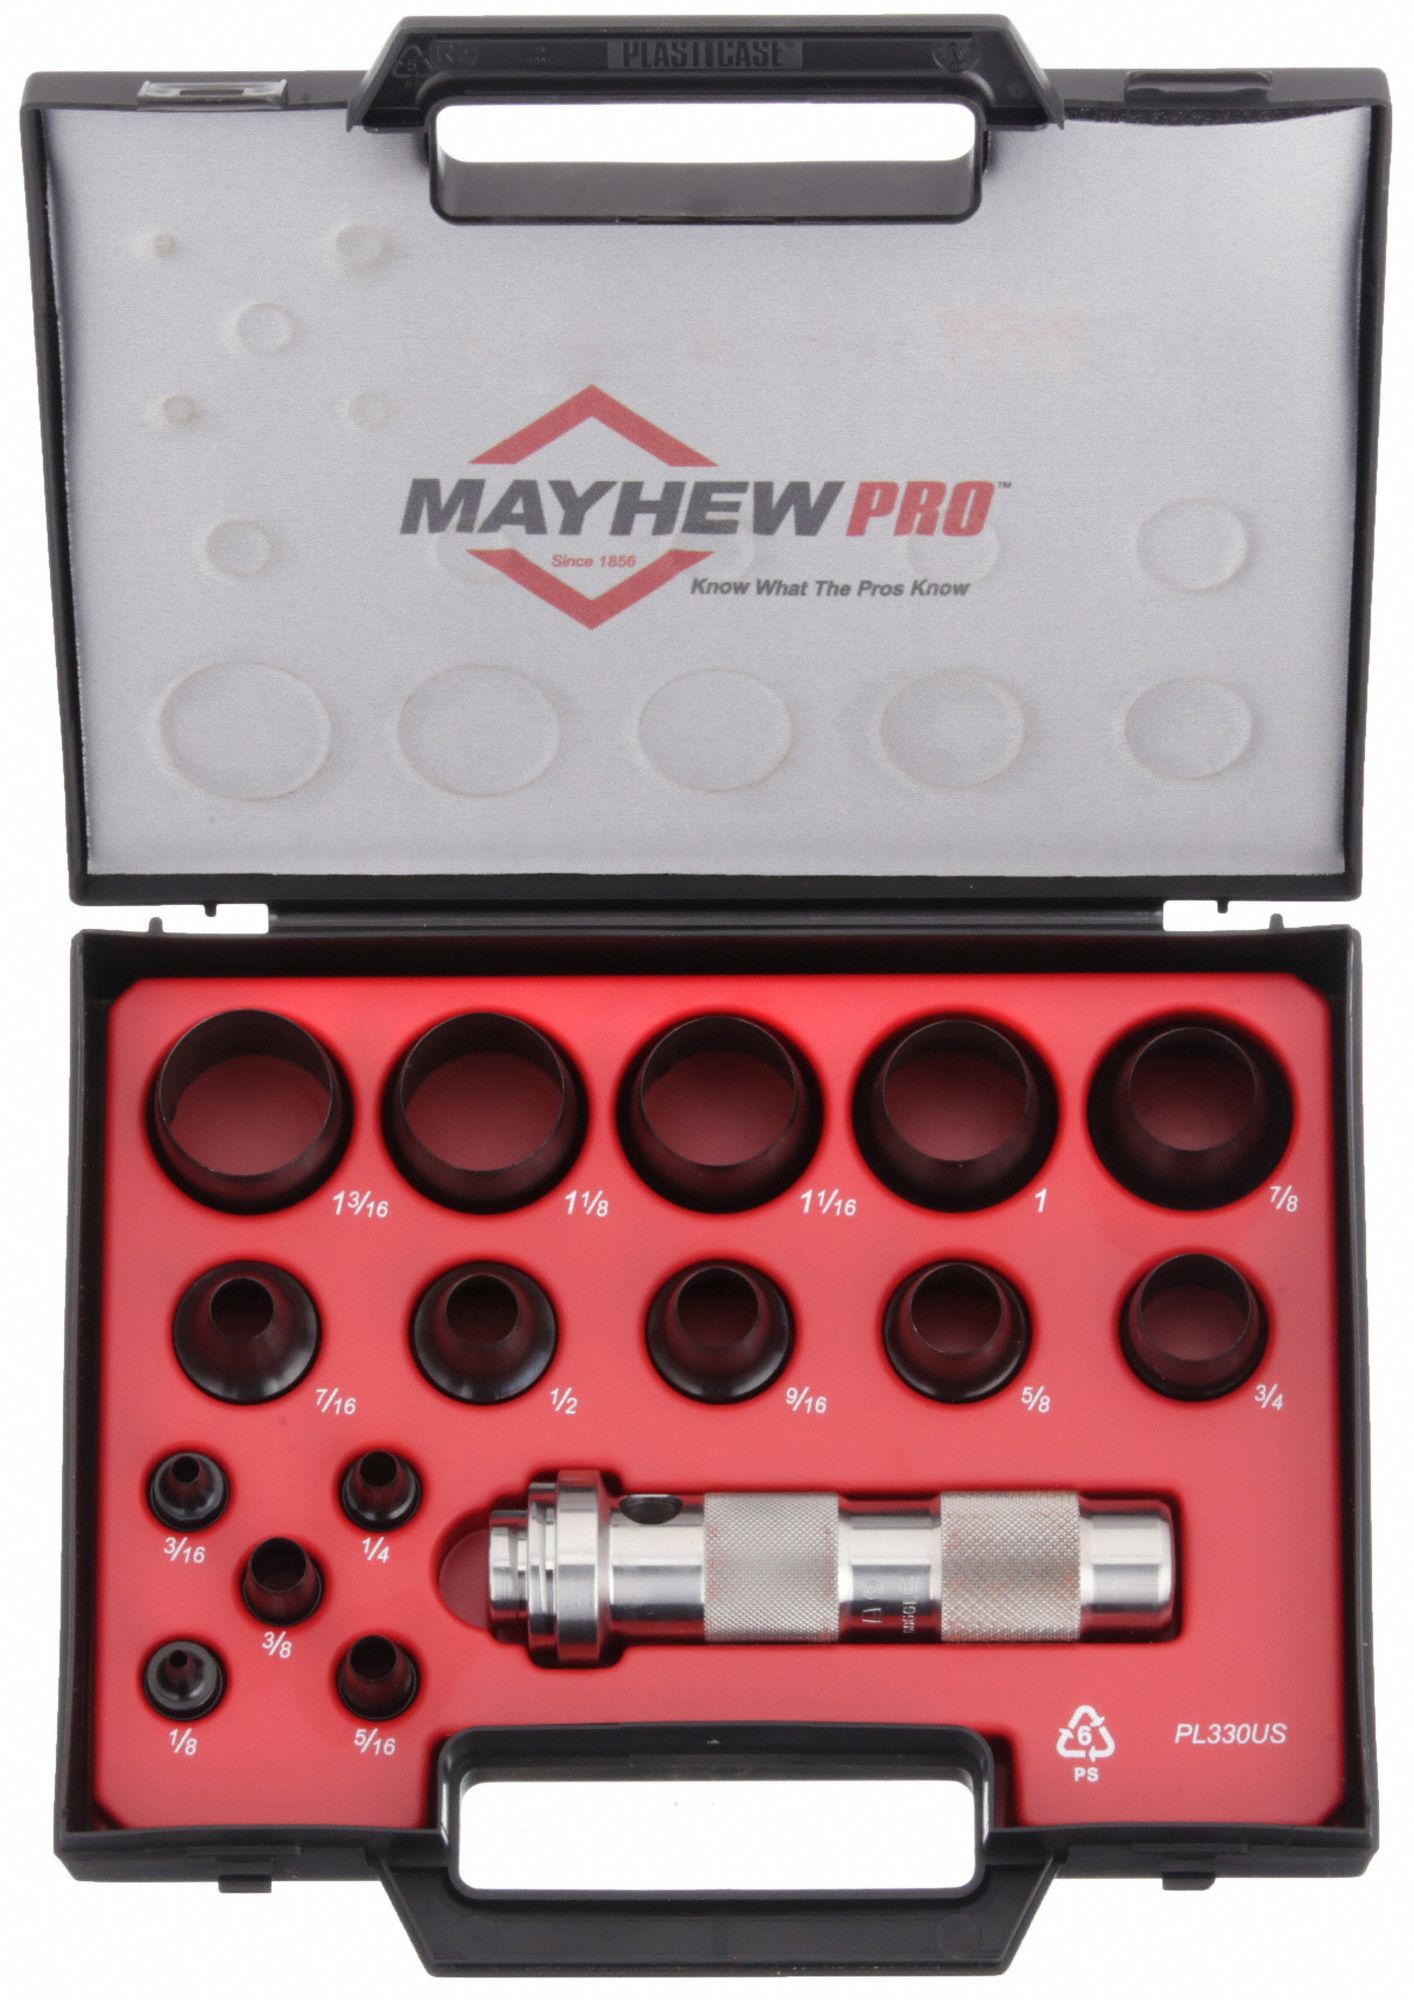 Mayhew - Hollow Punch: 2″ - 60880986 - MSC Industrial Supply